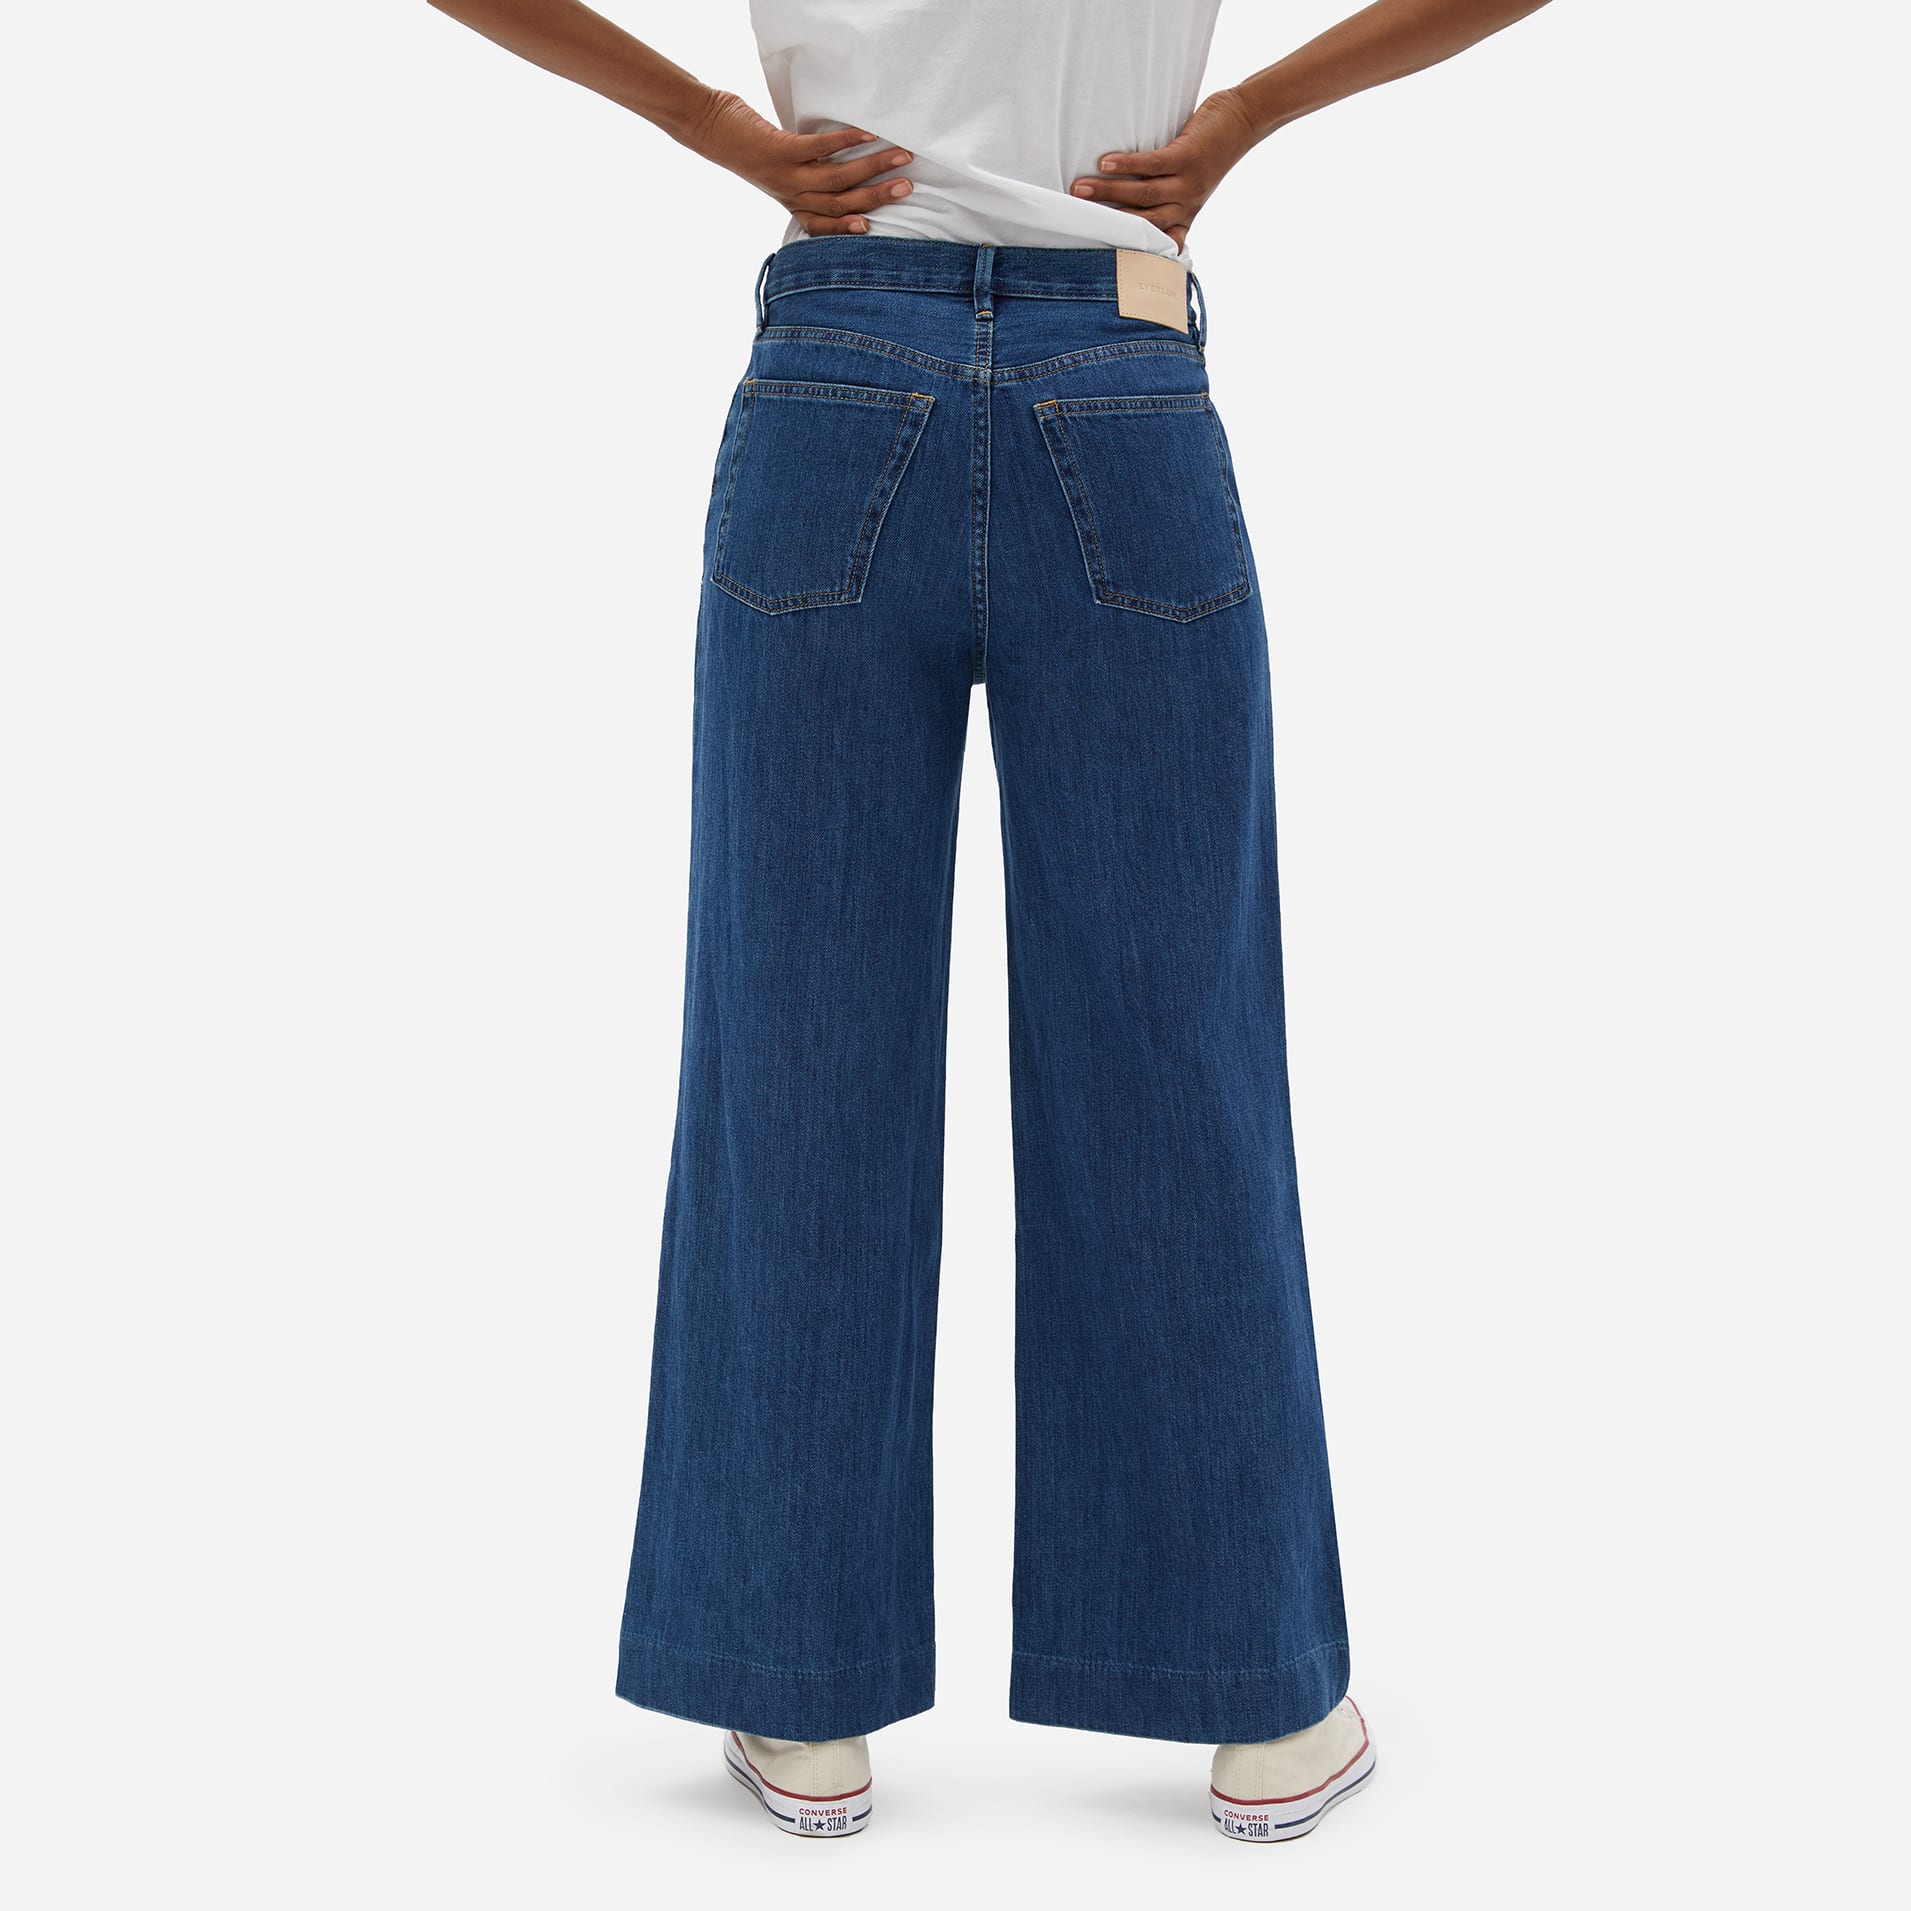 wide leg soft jeans